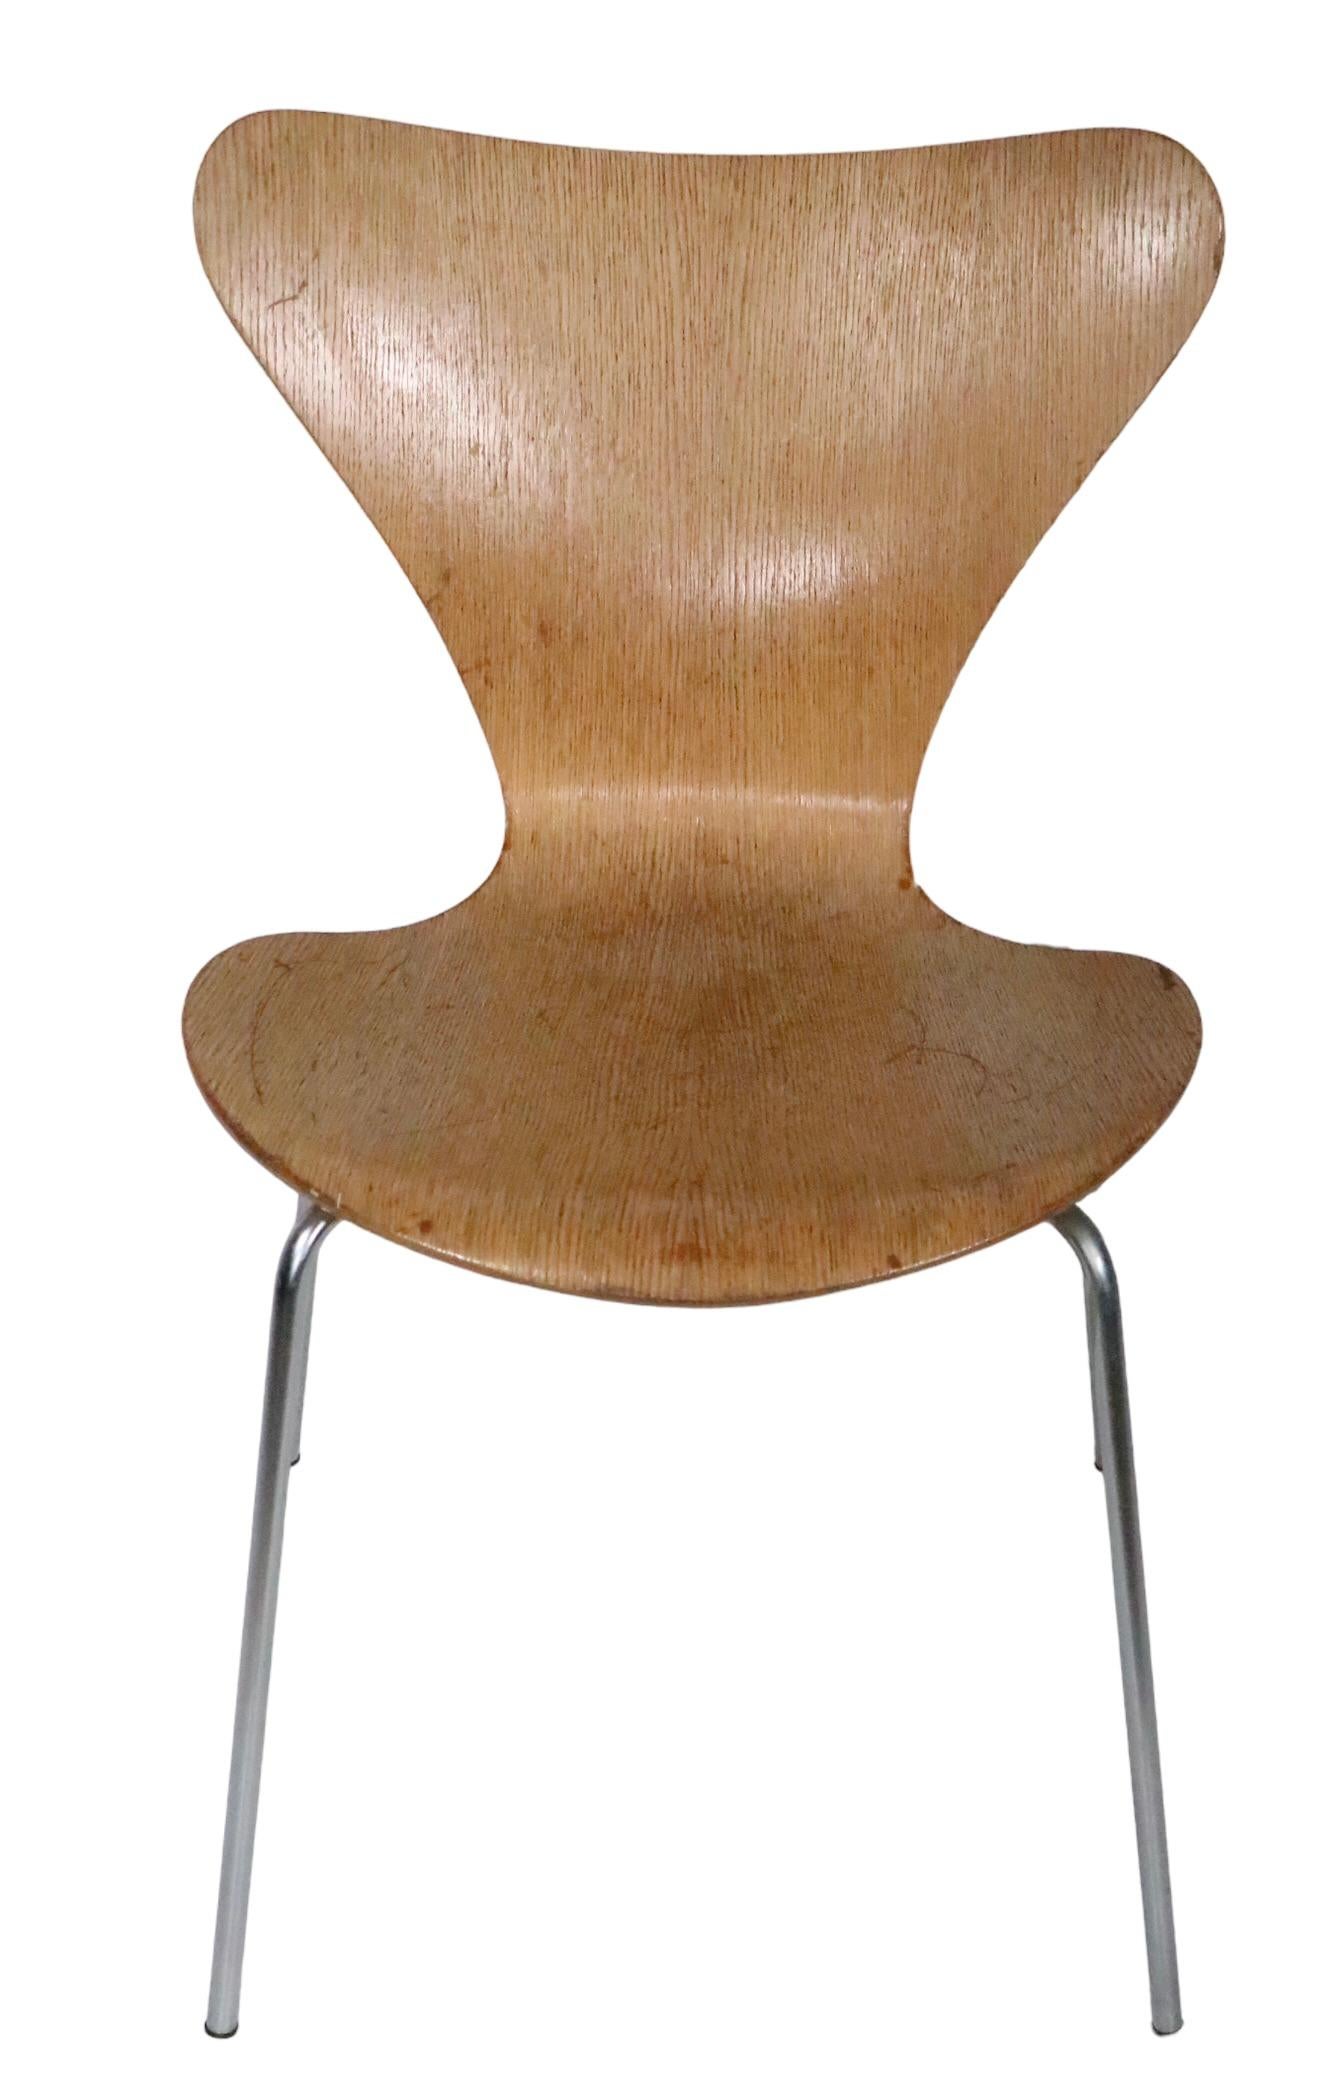 Arne Jacobsen Fritz Hansen Series 7 Butterfly Chair in Oak Veneer, circa 1960s For Sale 5